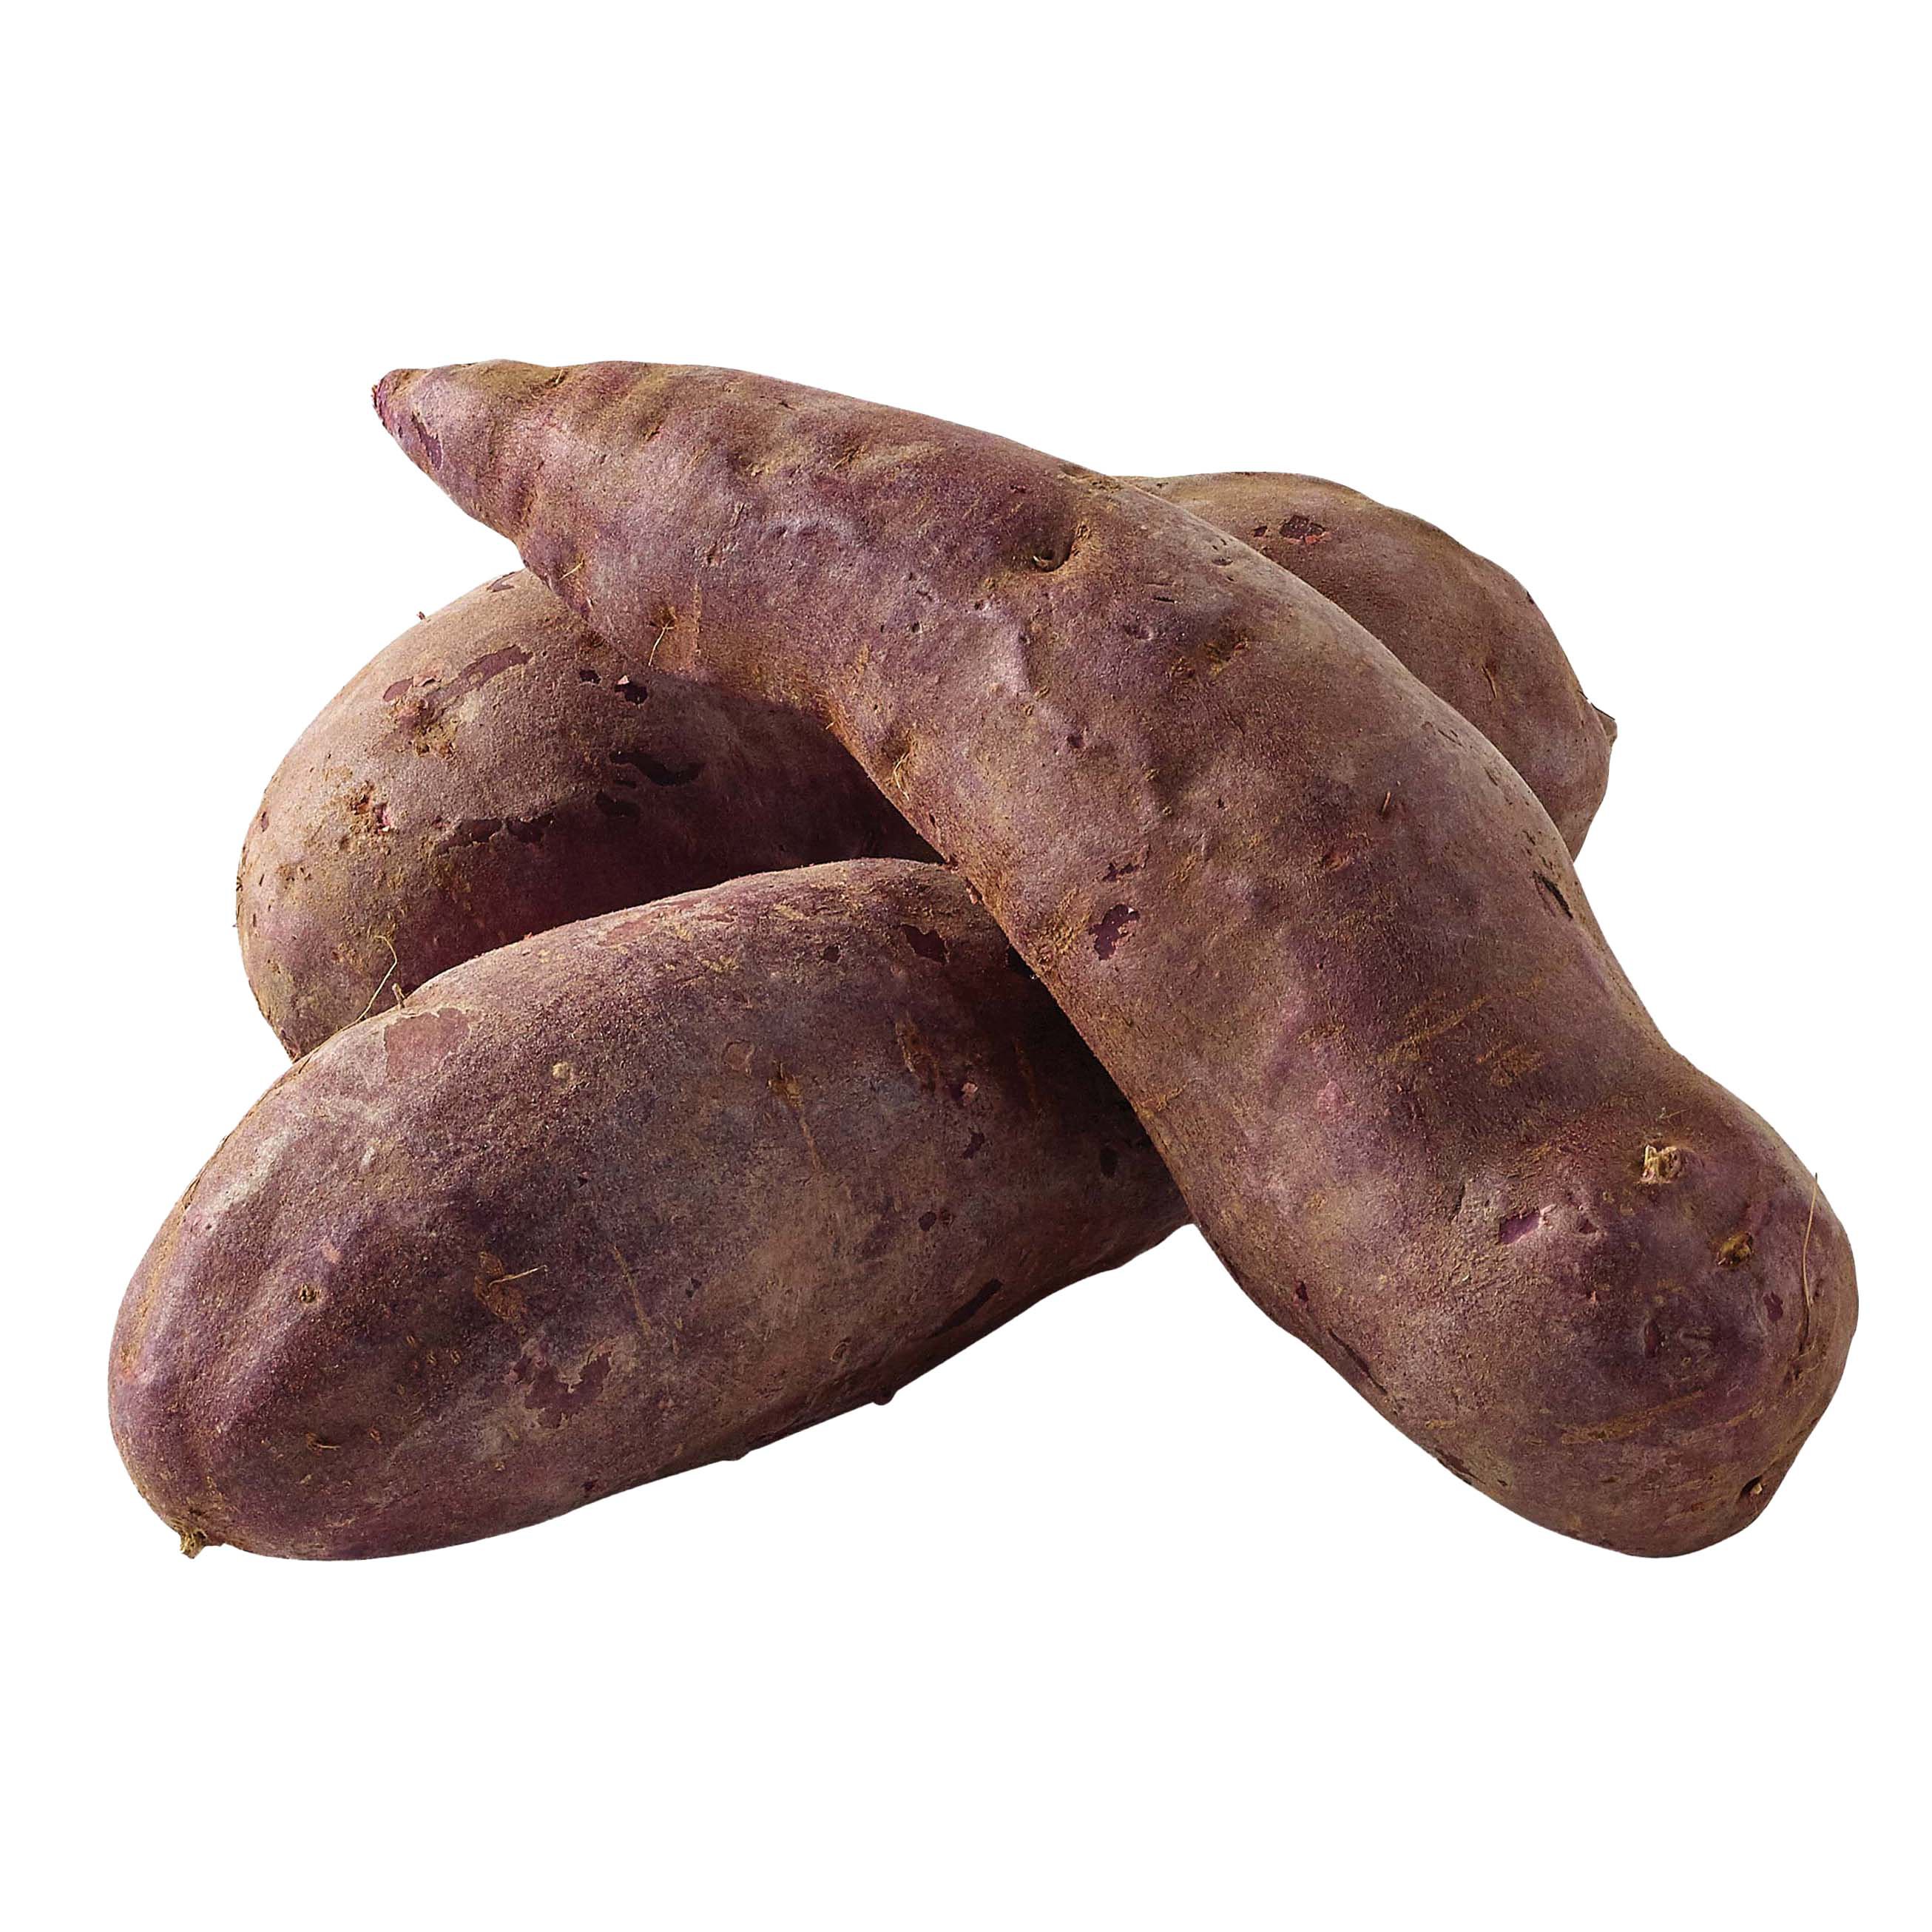 Fresh Purple Flesh Ubi Sweet Yam Potatoes Tubers 2 Pound FREE PRIORITY SHIPPING